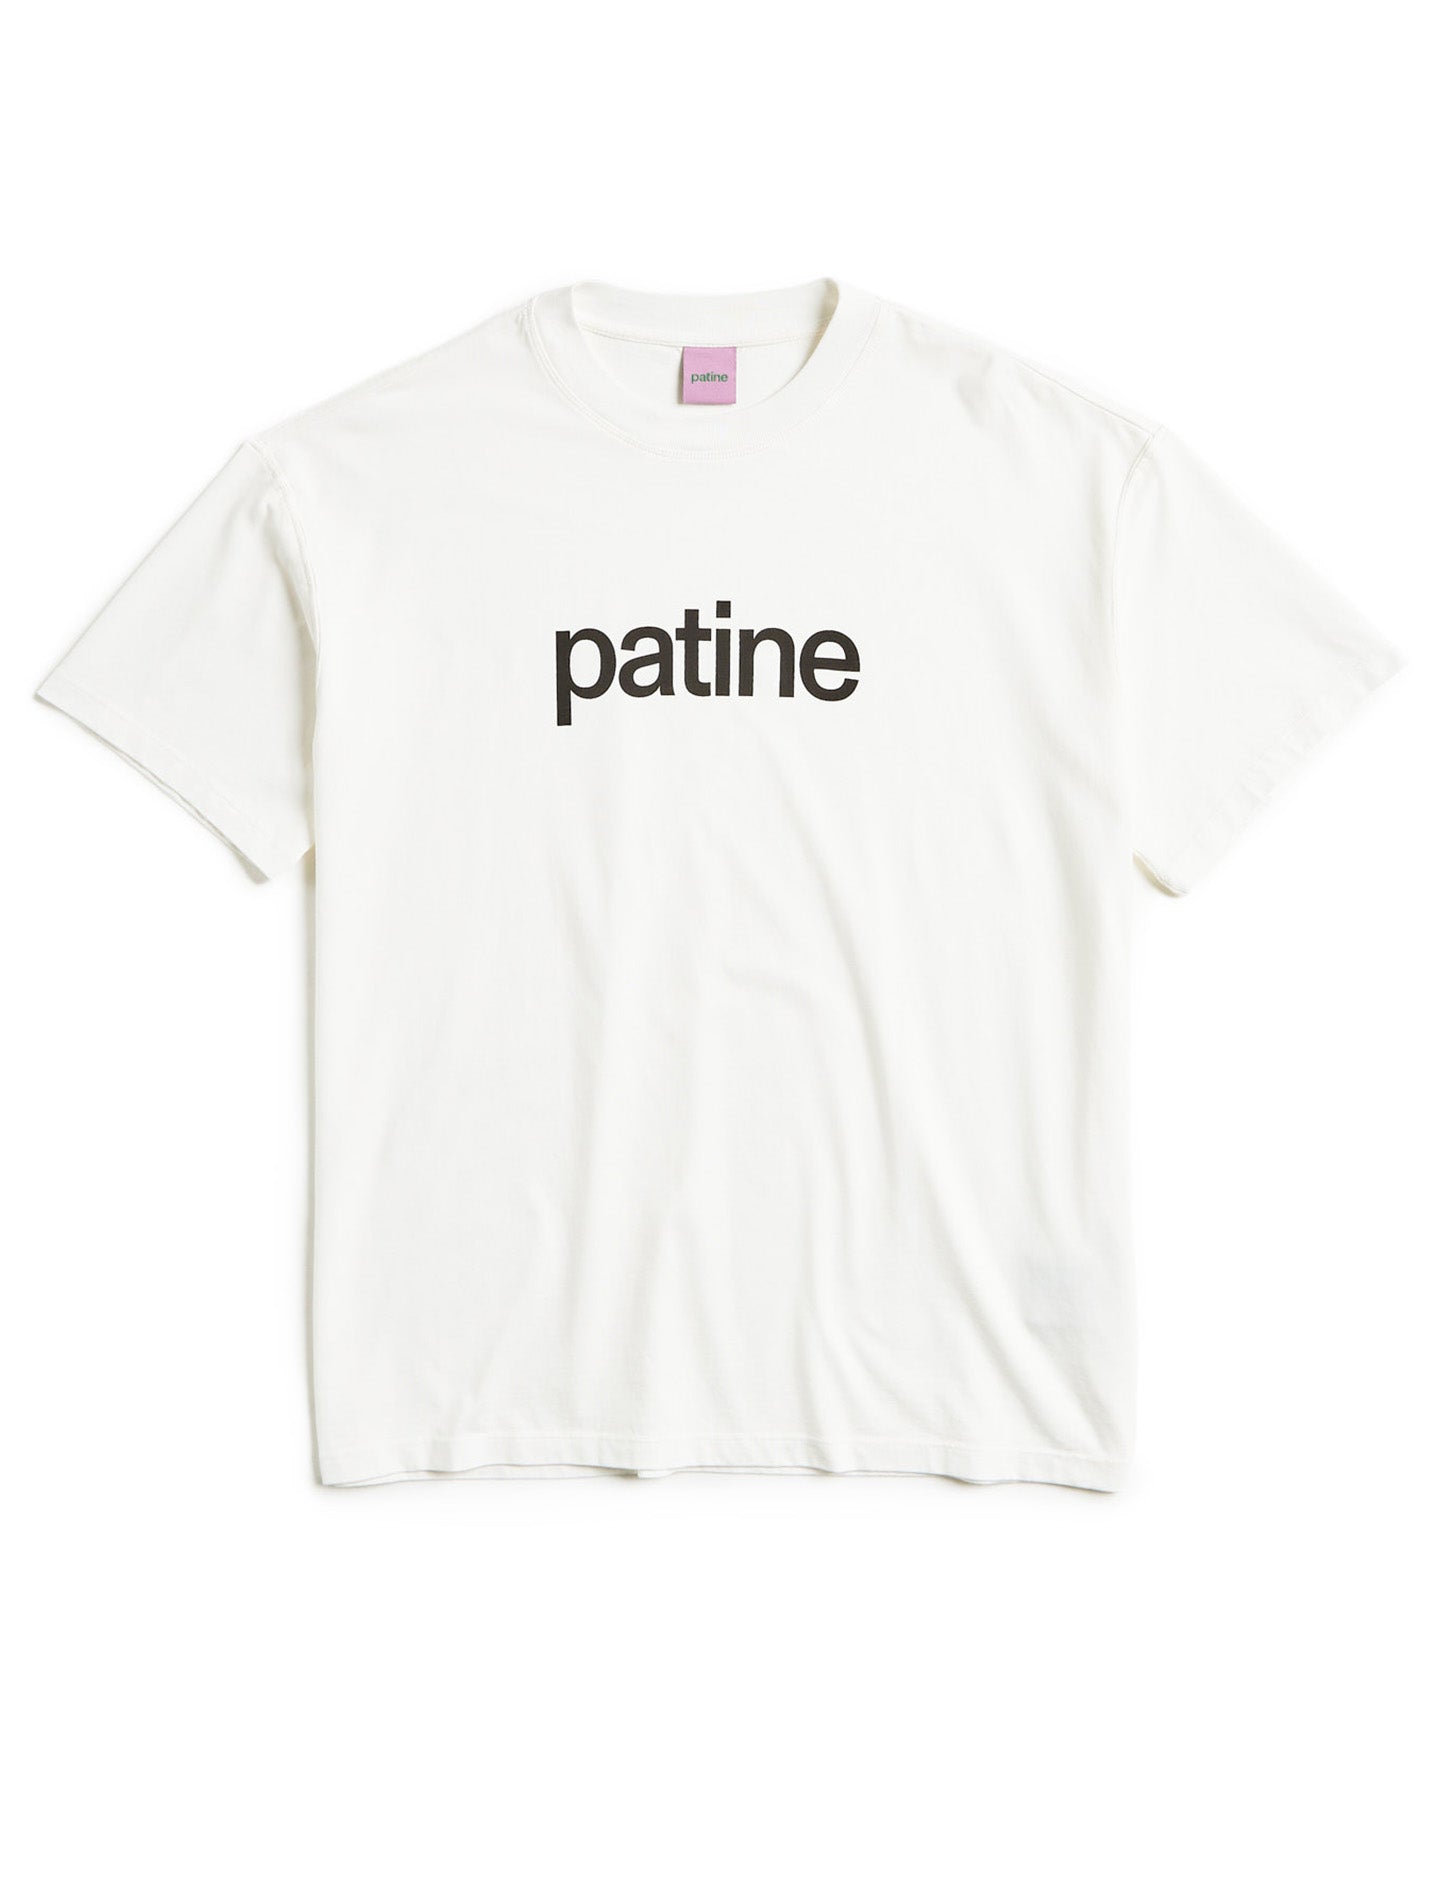 Le tee-shirt Super Willie® jersey bio-recyclé Patine